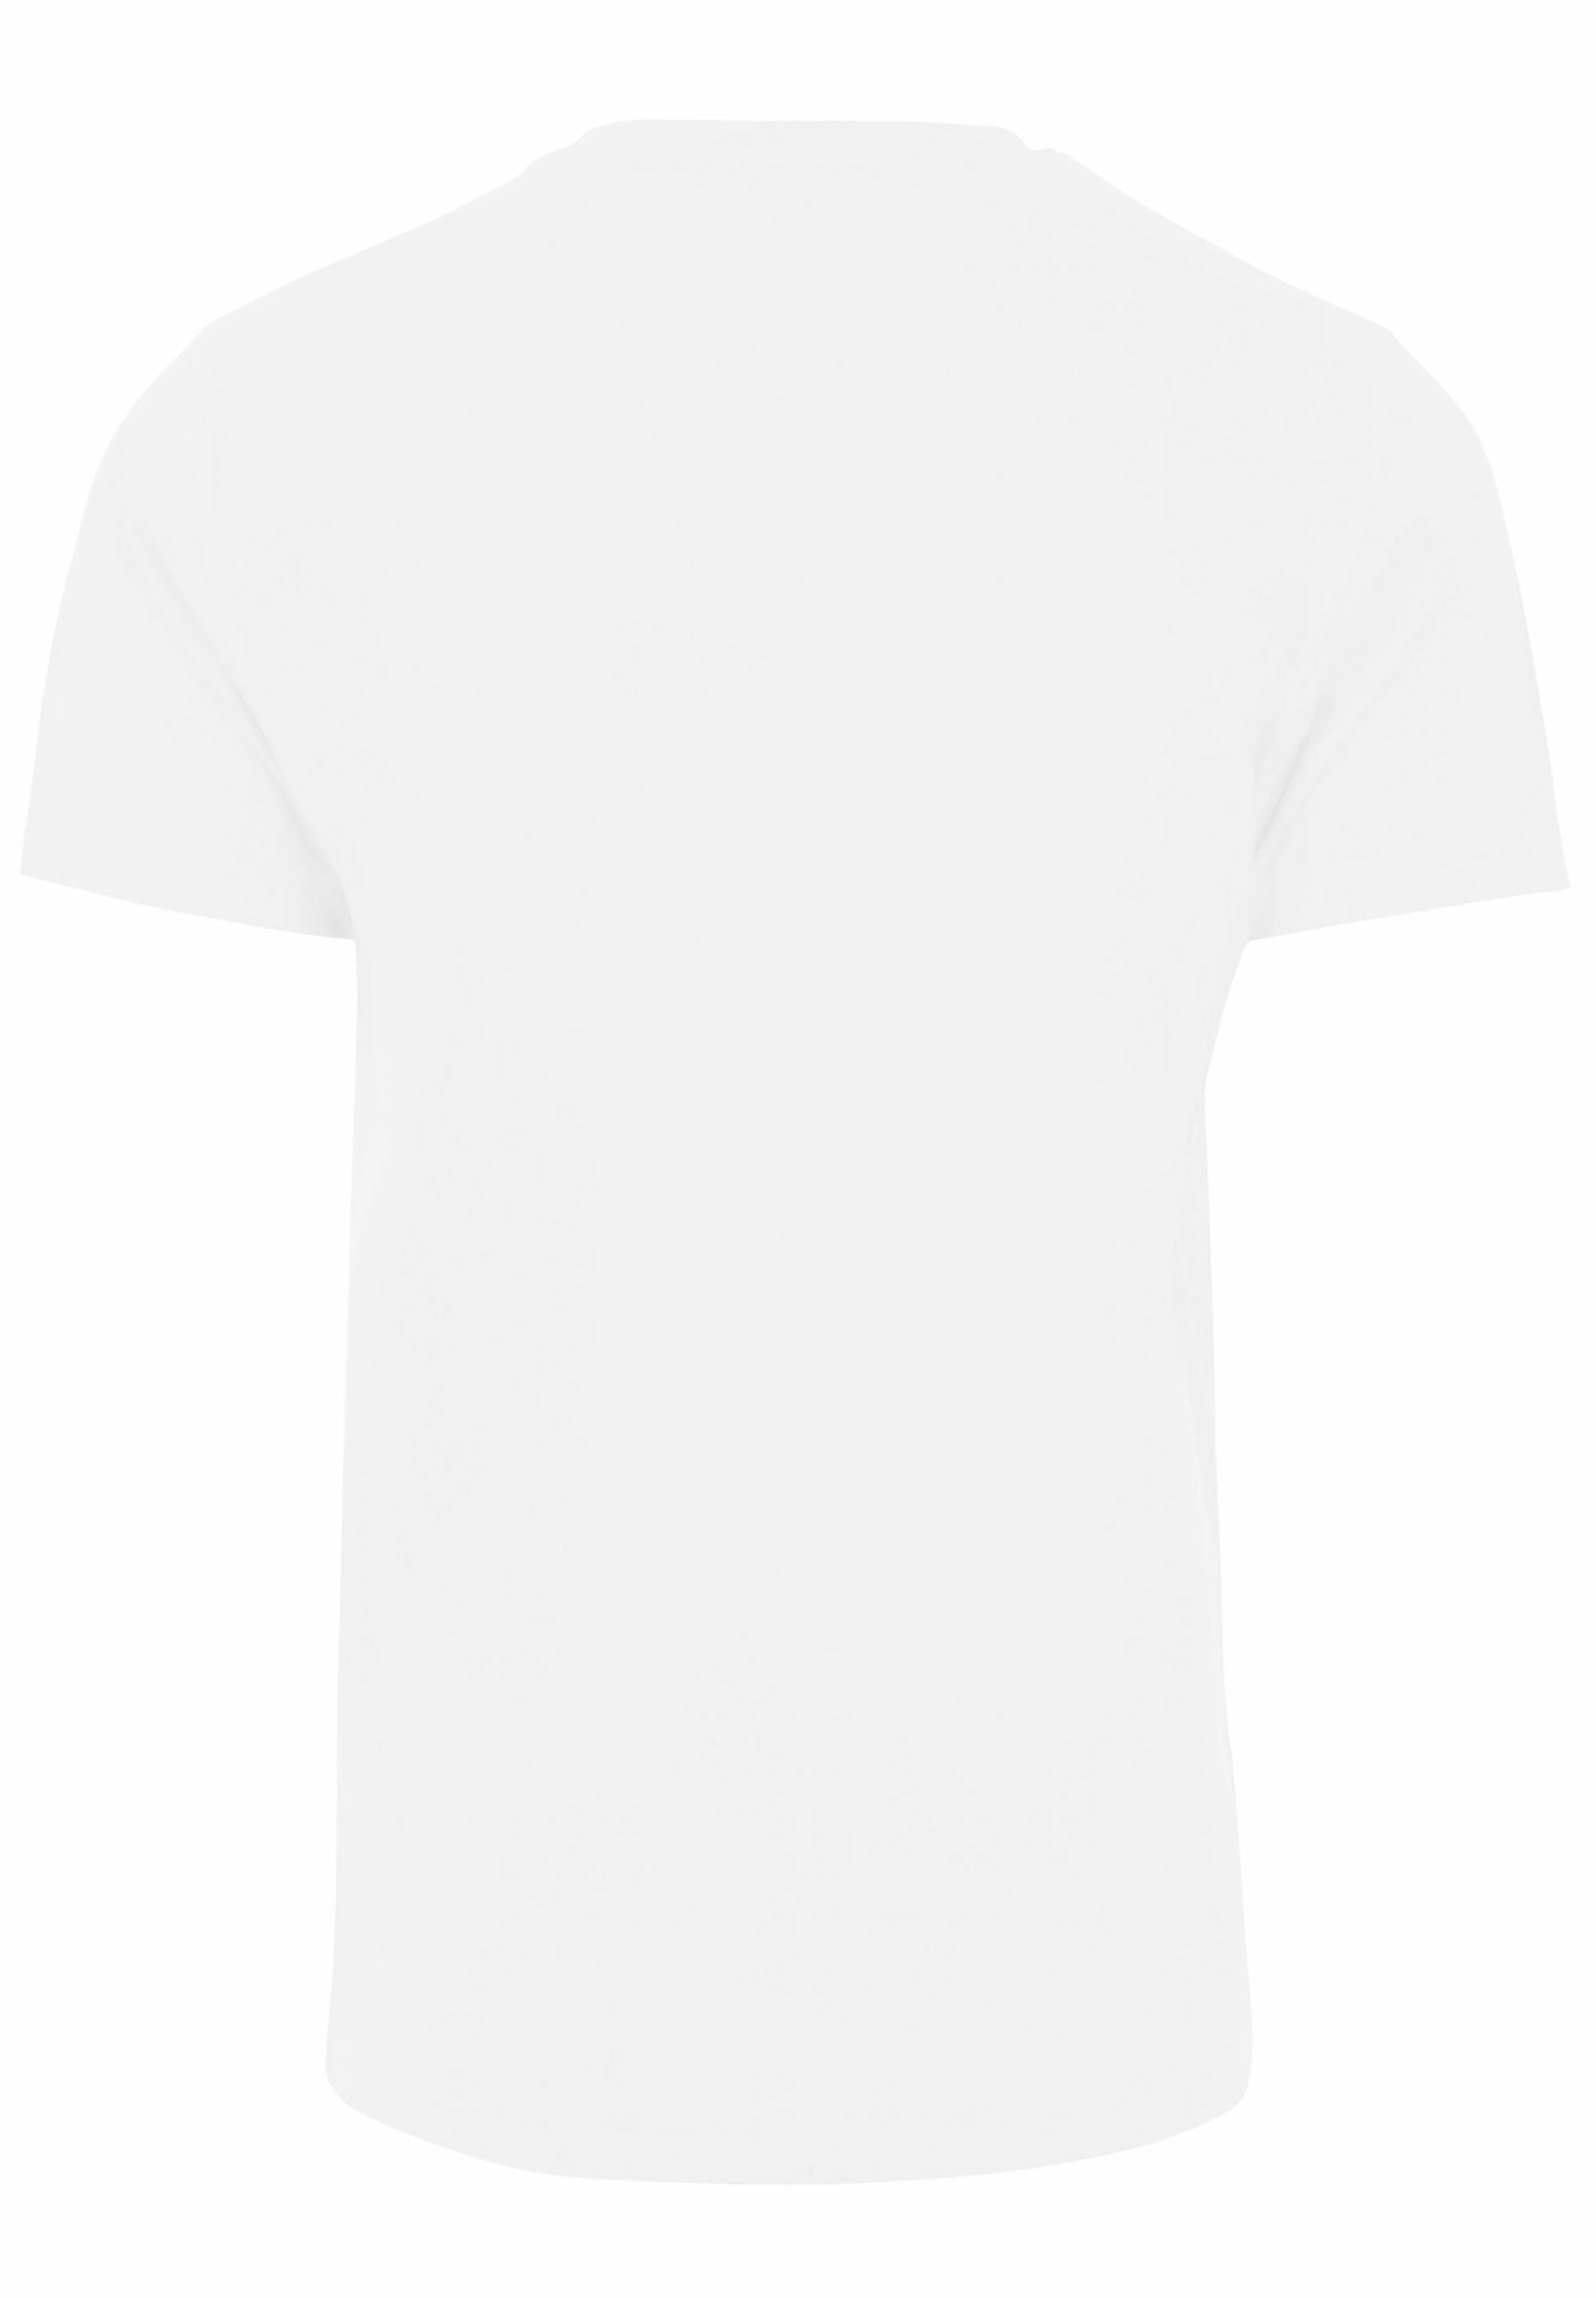 F4NT4STIC T-Shirt weiß Schwammkopf Merch,Regular-Fit,Basic,Bedruckt Spongebob WHATEVER Herren,Premium